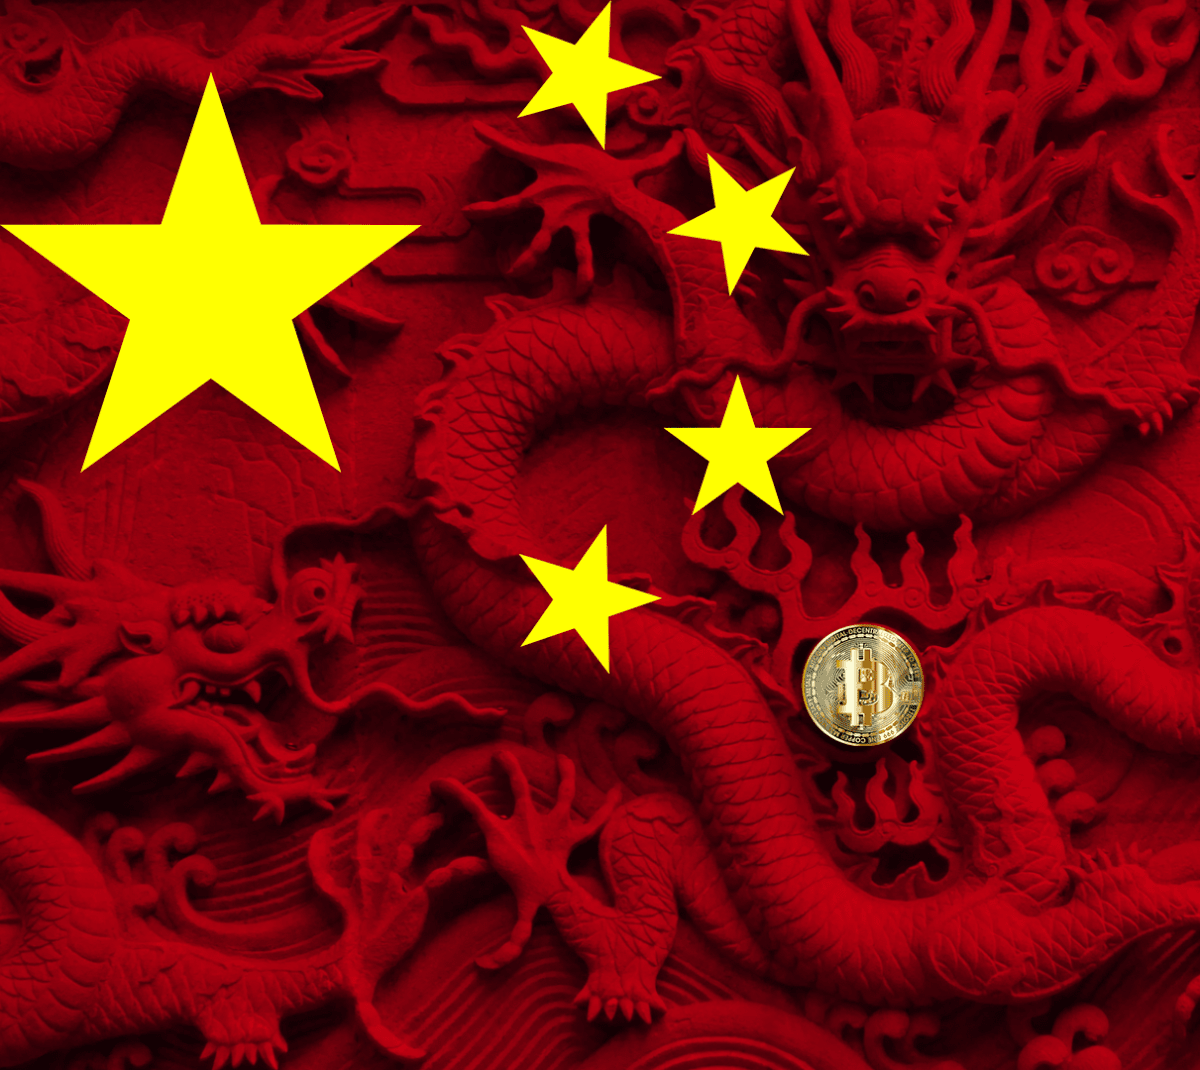 The-people’s-bank-of-china-bans-bitcoin,-again